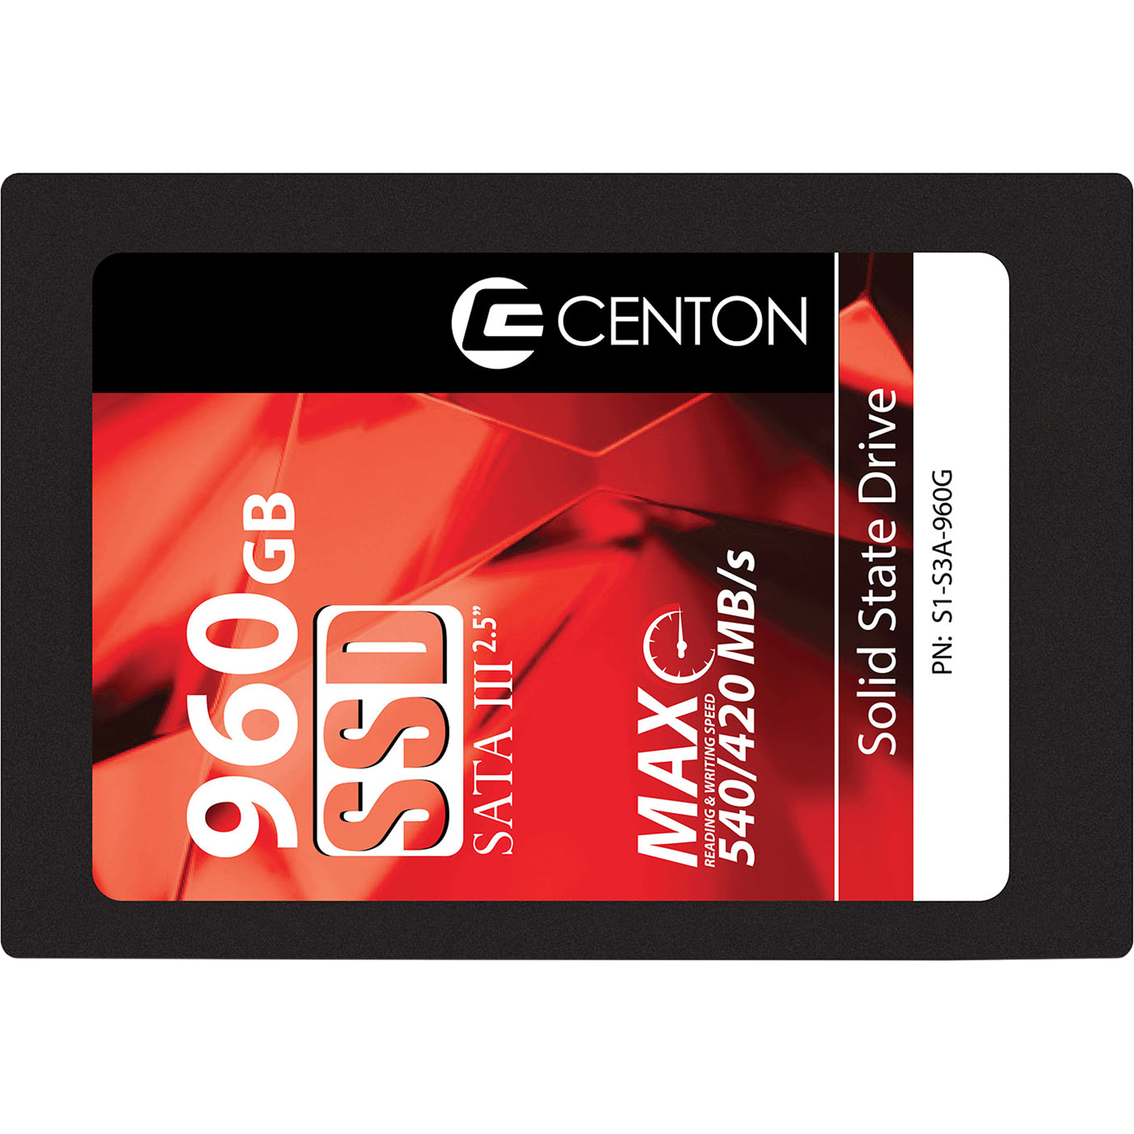 Centon Dash 960GB 2.5 SATA III internal SSD